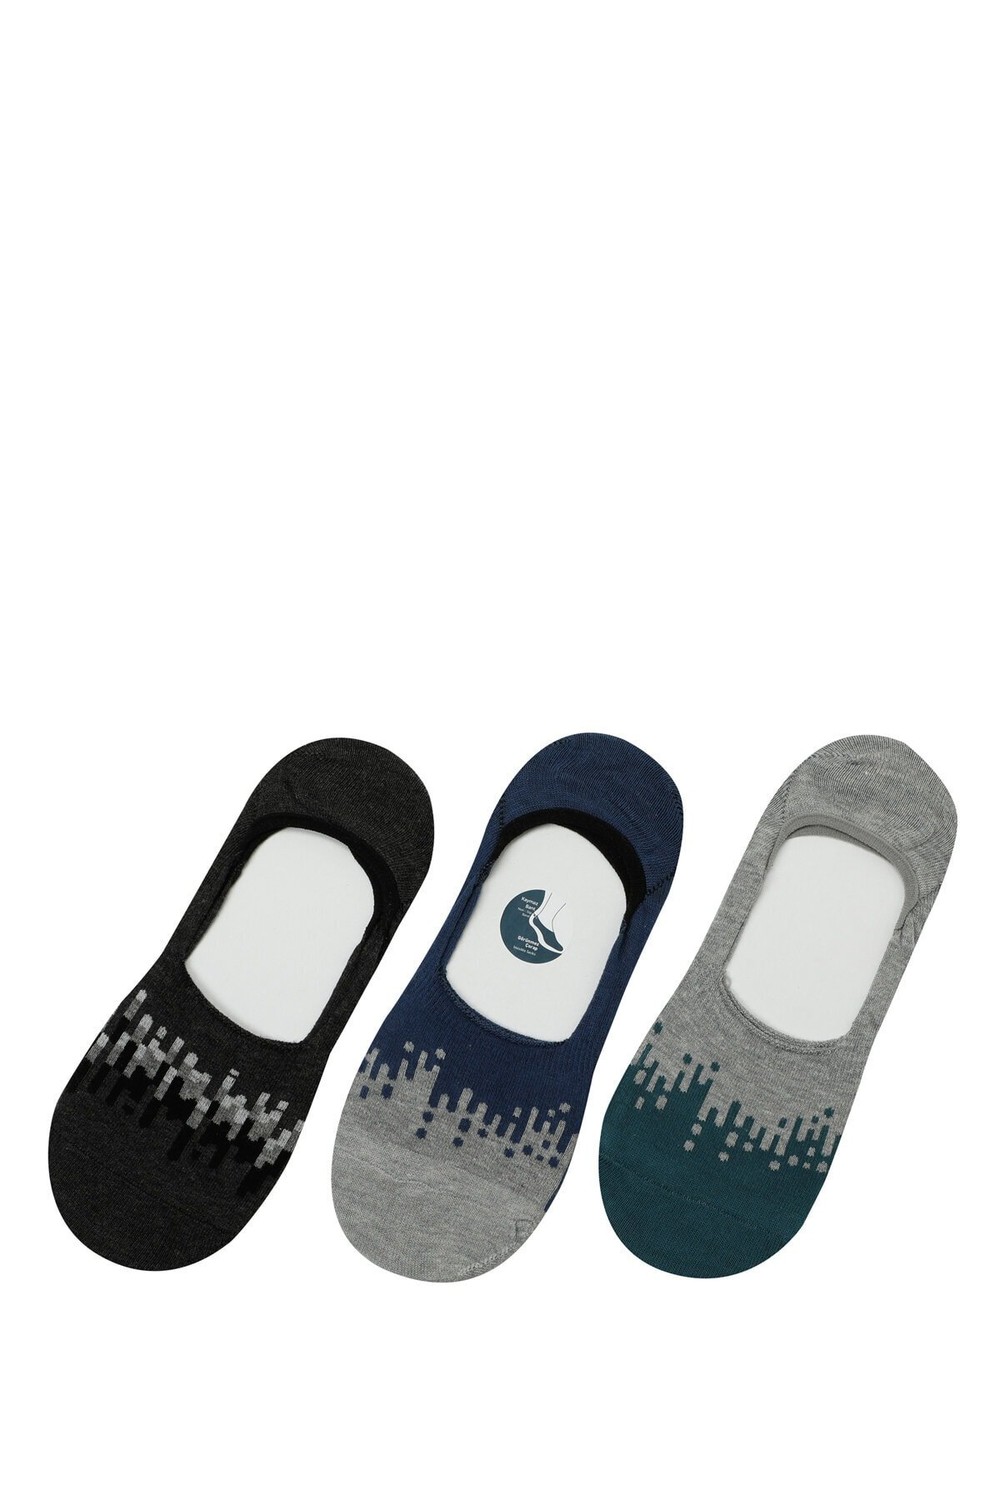 Polaris Drop 3 Lu Suba-m 3fx Men's Gray Multicolored Socks